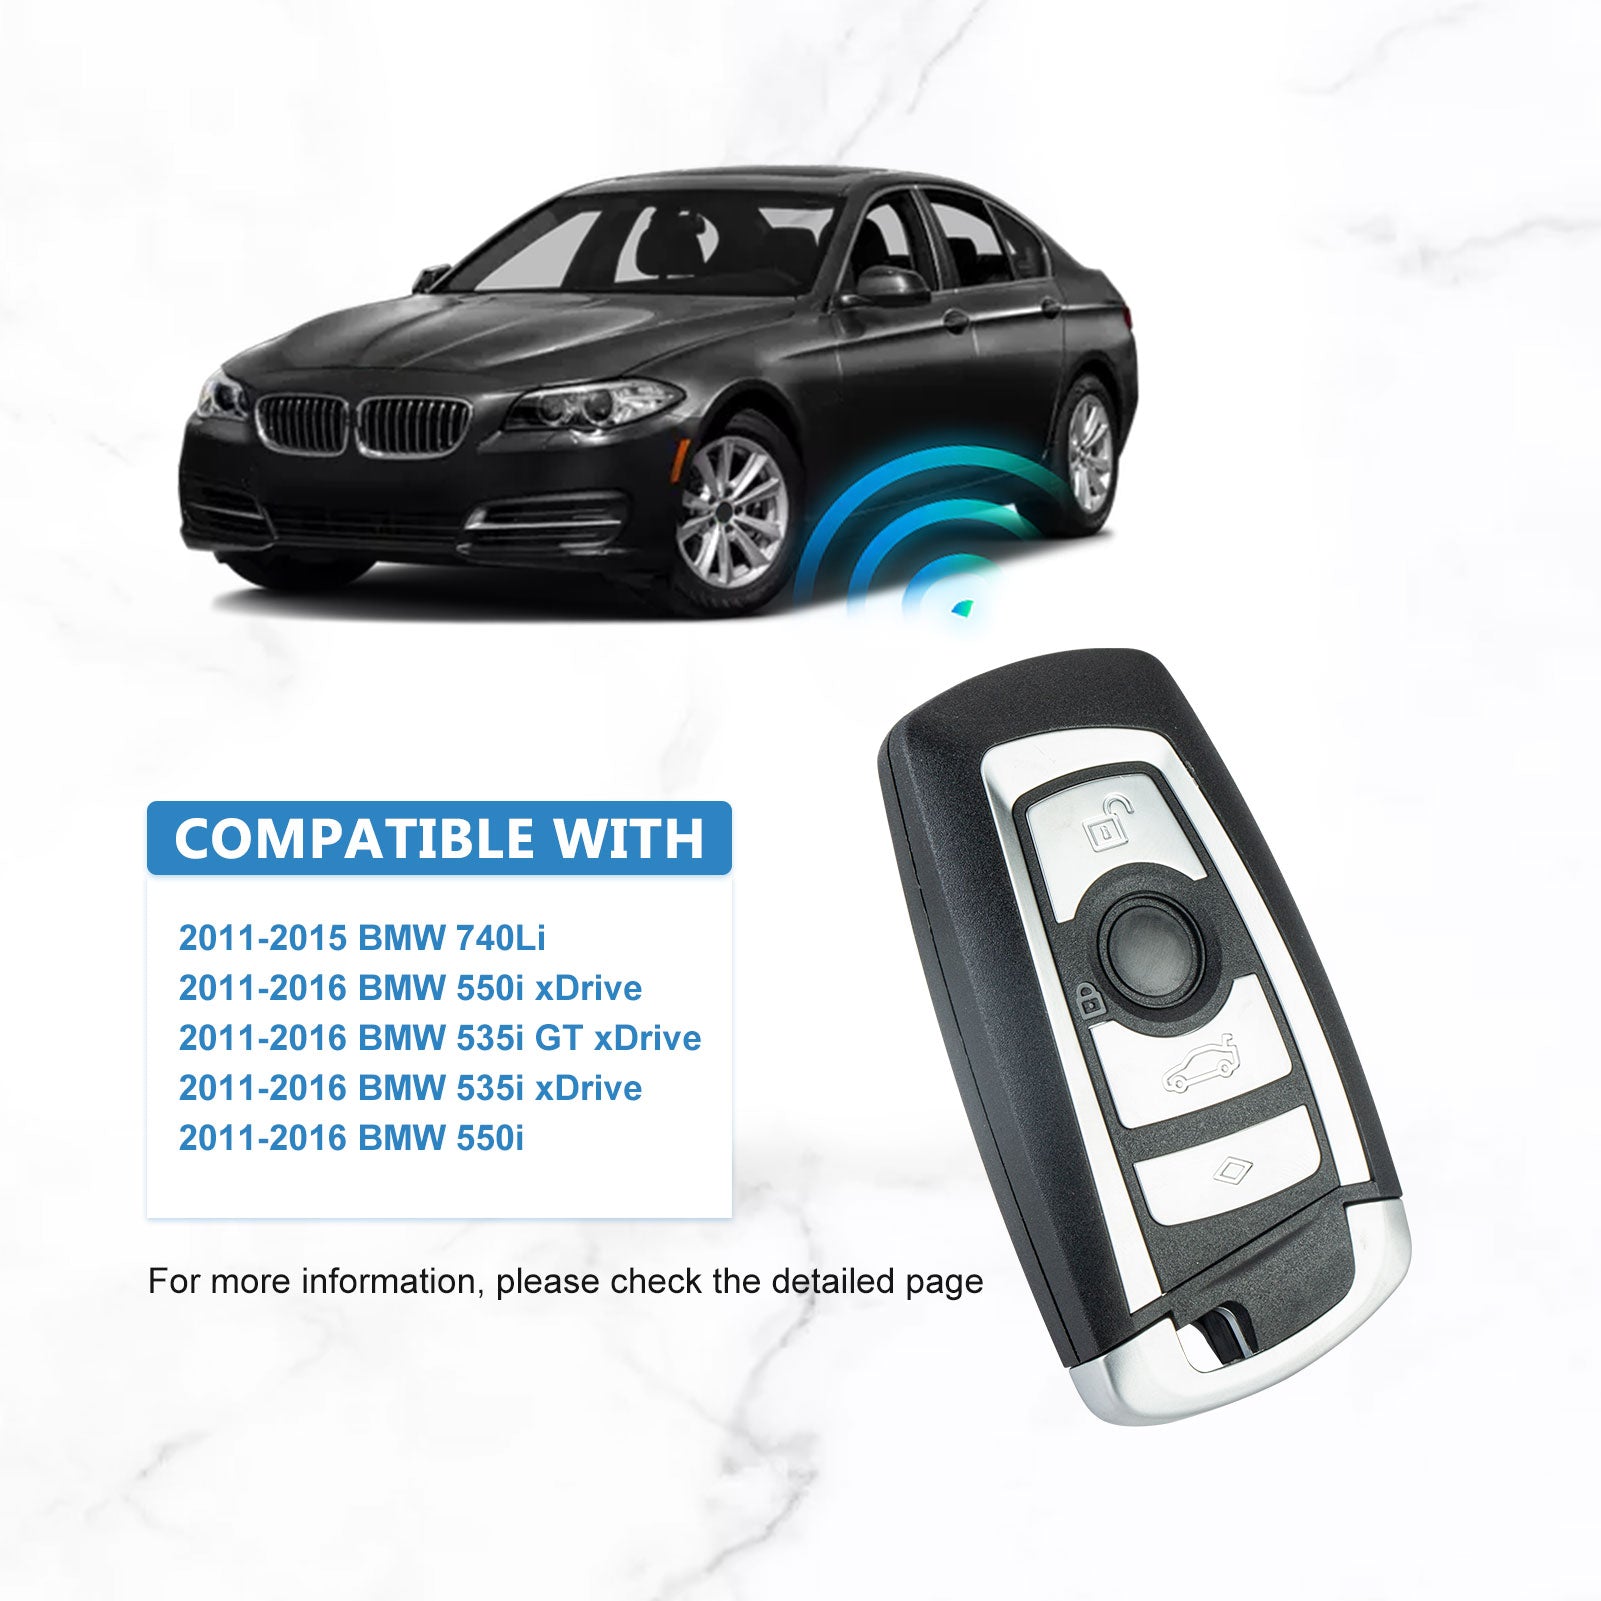 Keyless Entry Car Key Fob 315Mhz Replacement for 2010-2015 750Li/2010-2015 750Li xDrive/2010-2015 750Li/2010-2015 750Li xDrive KR55WK49863   KR-B4RB